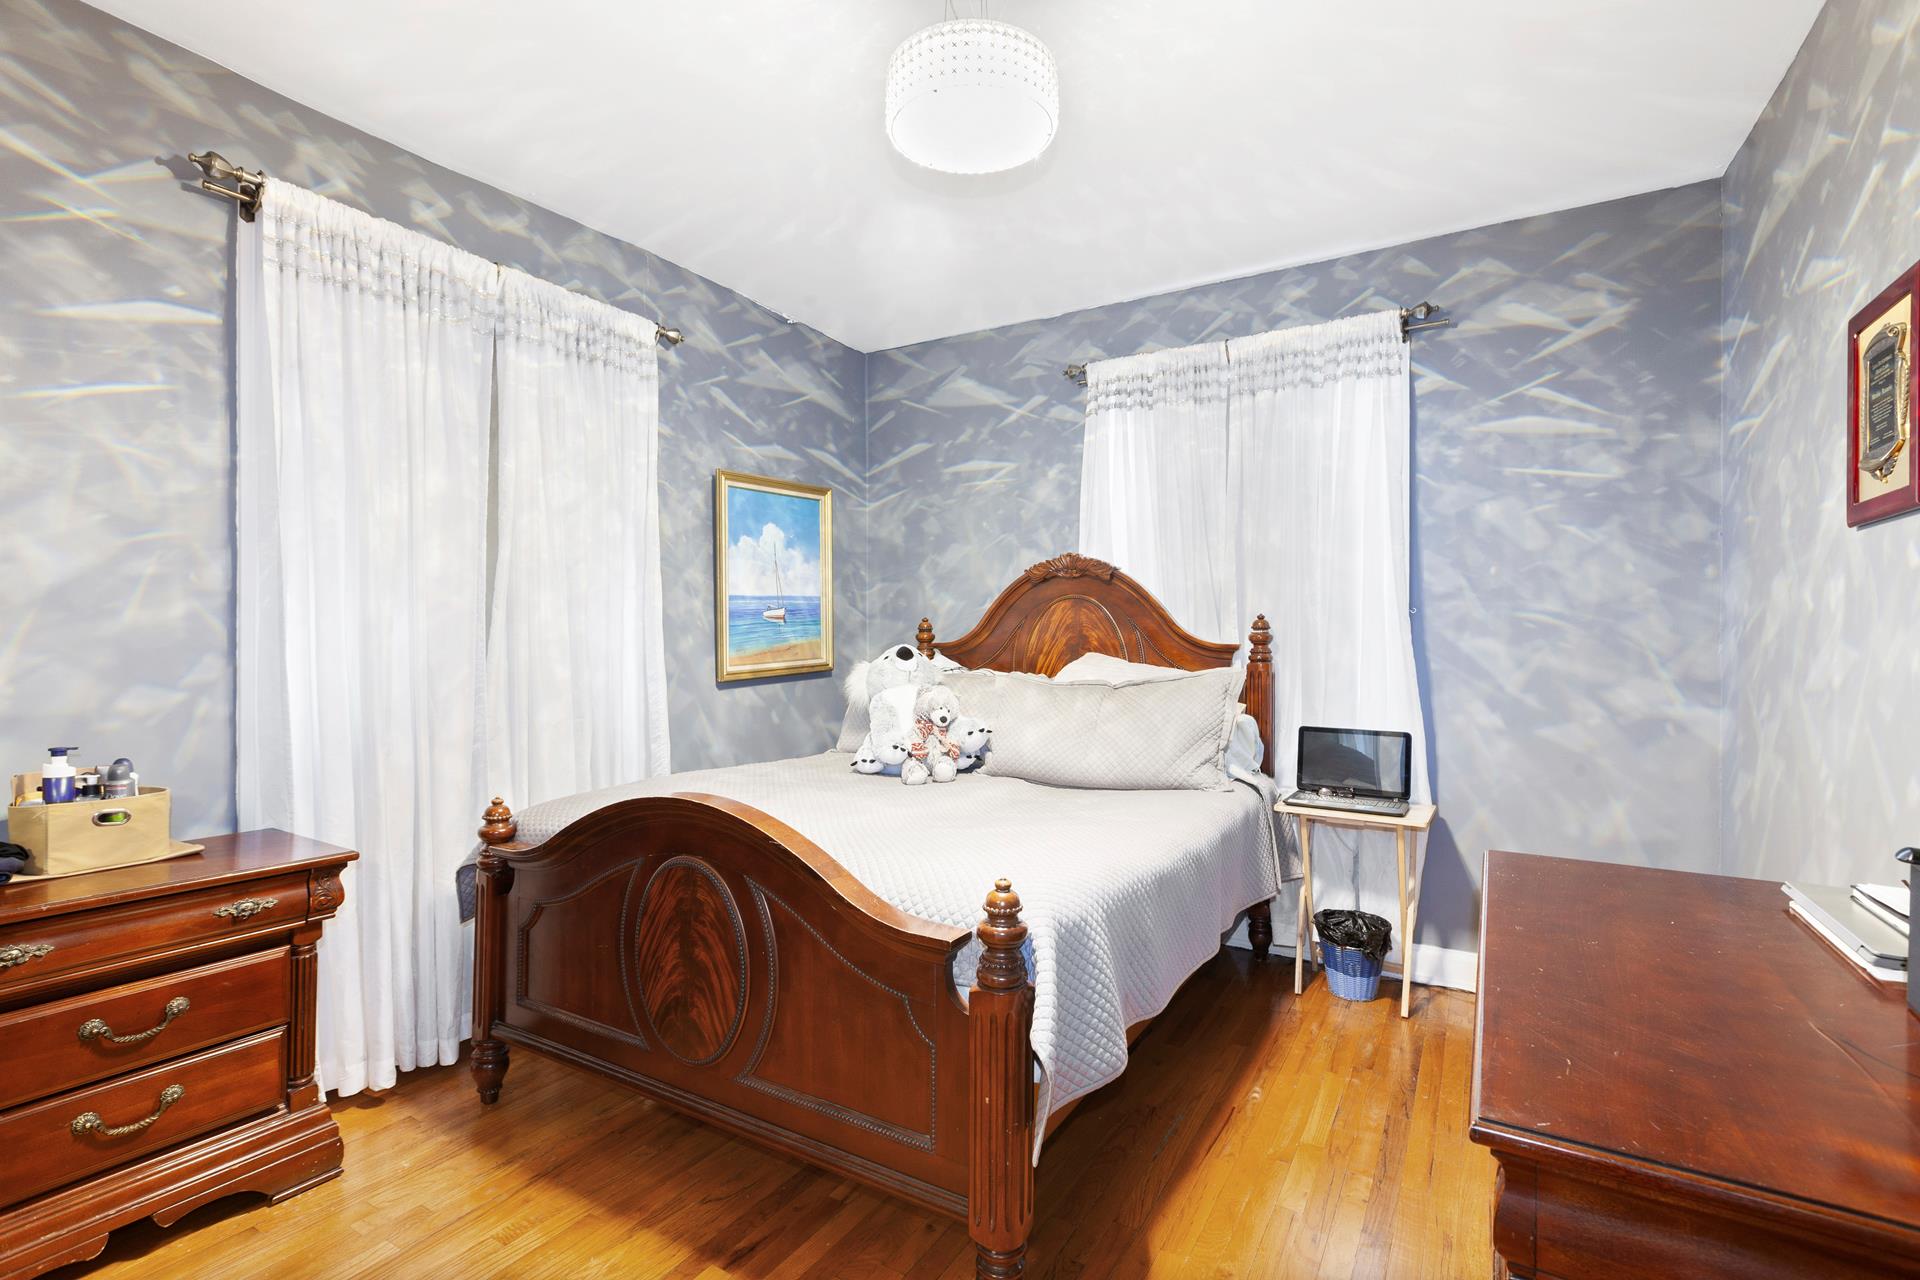 2440 Amsterdam Avenue 4K, Fort George, Upper Manhattan, NYC - 3 Bedrooms  
1 Bathrooms  
5 Rooms - 